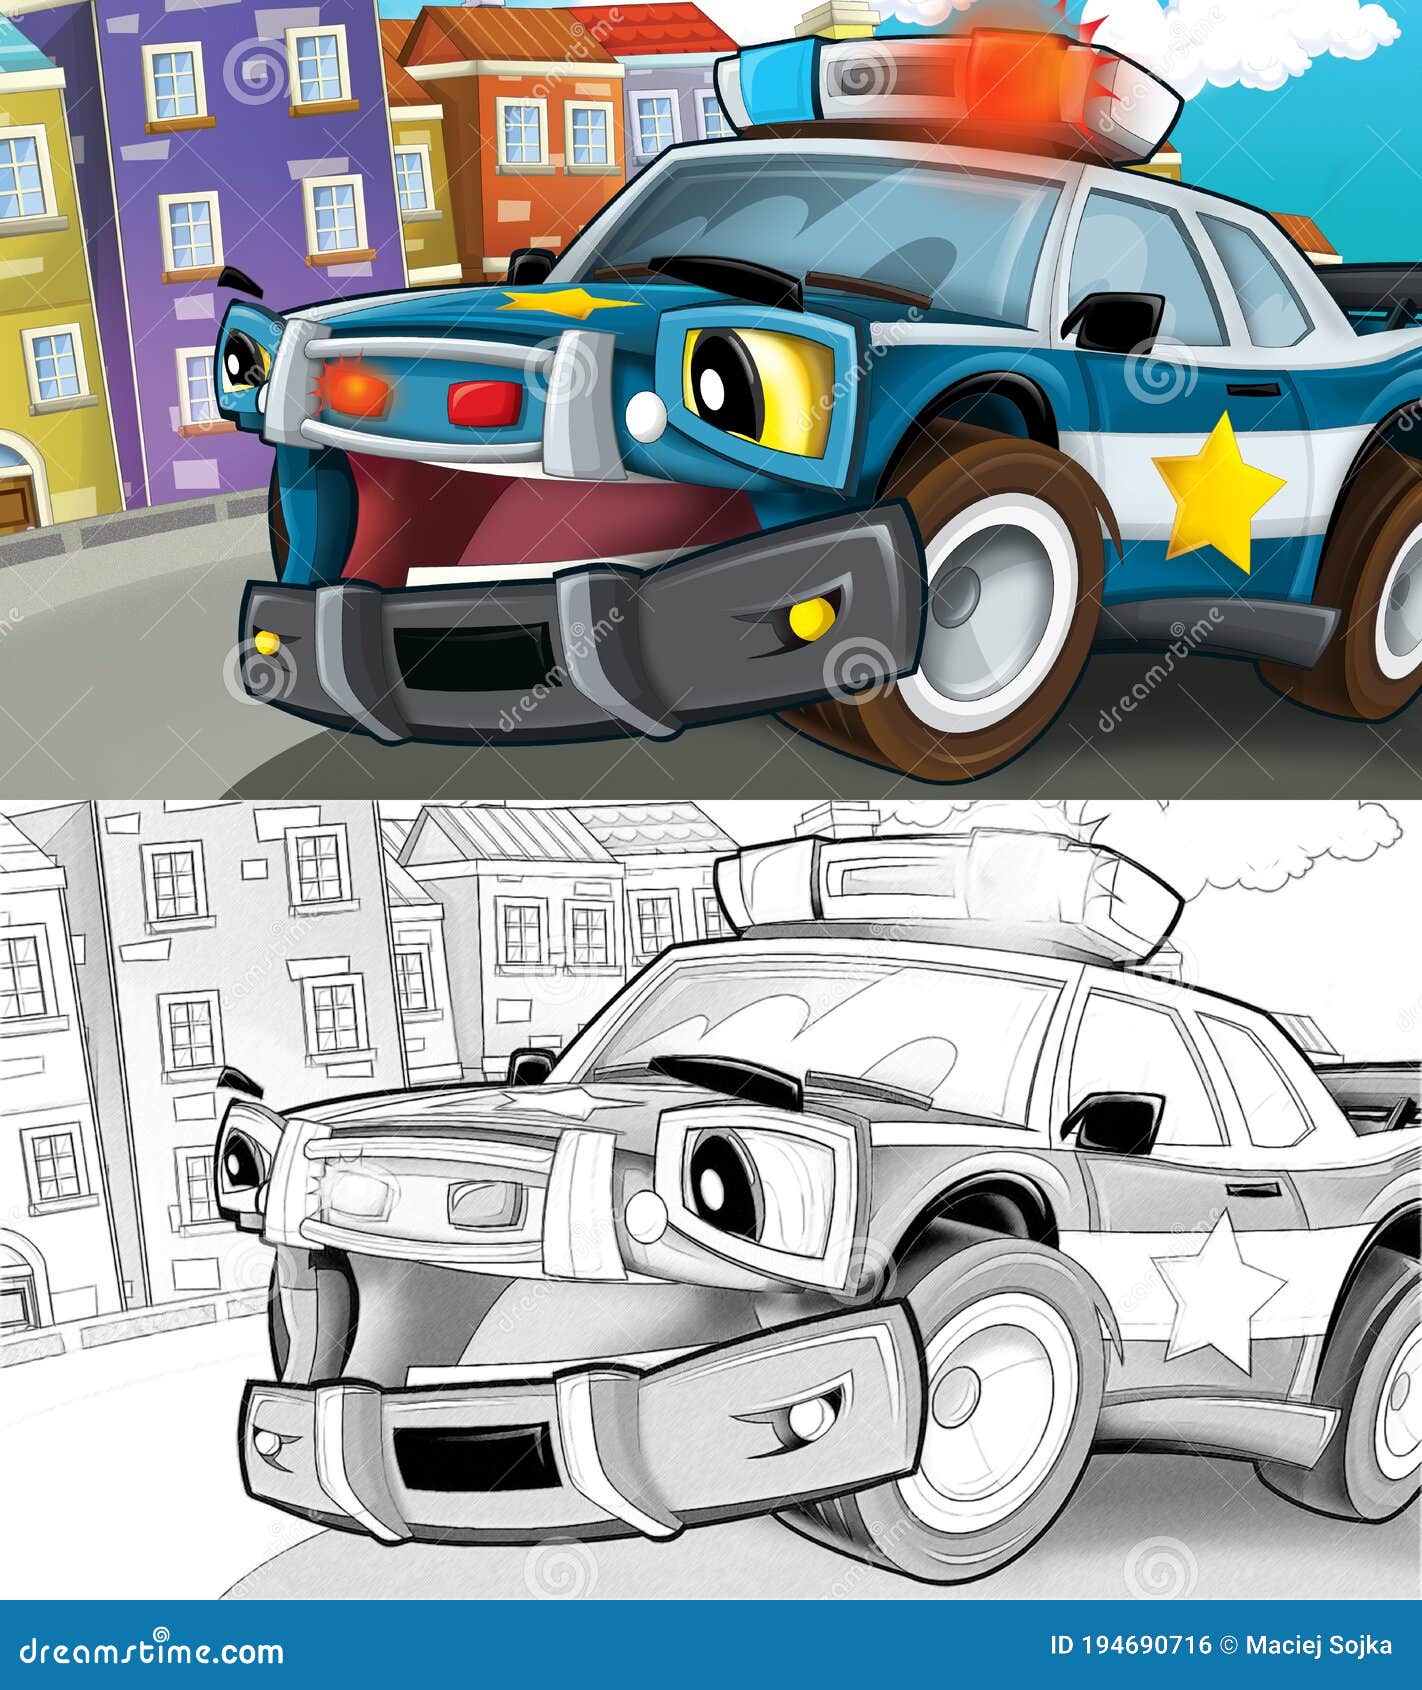 Cartoon Scene with Police Car in City Illustration Stock Illustration ...